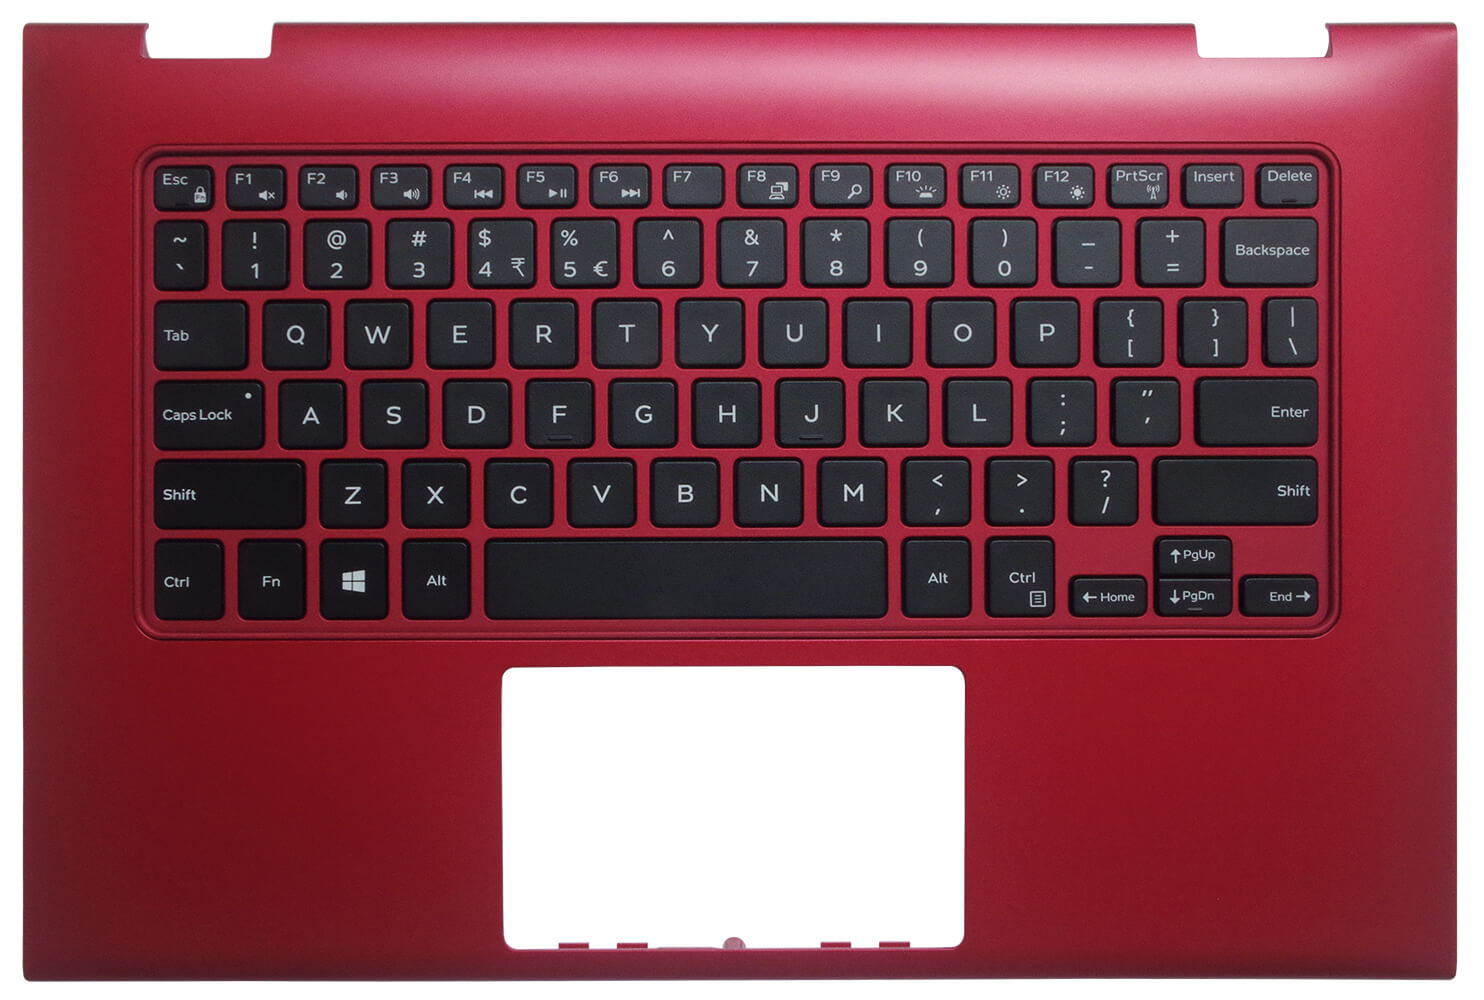 Dell Inspiron 13 7000 Keyboard